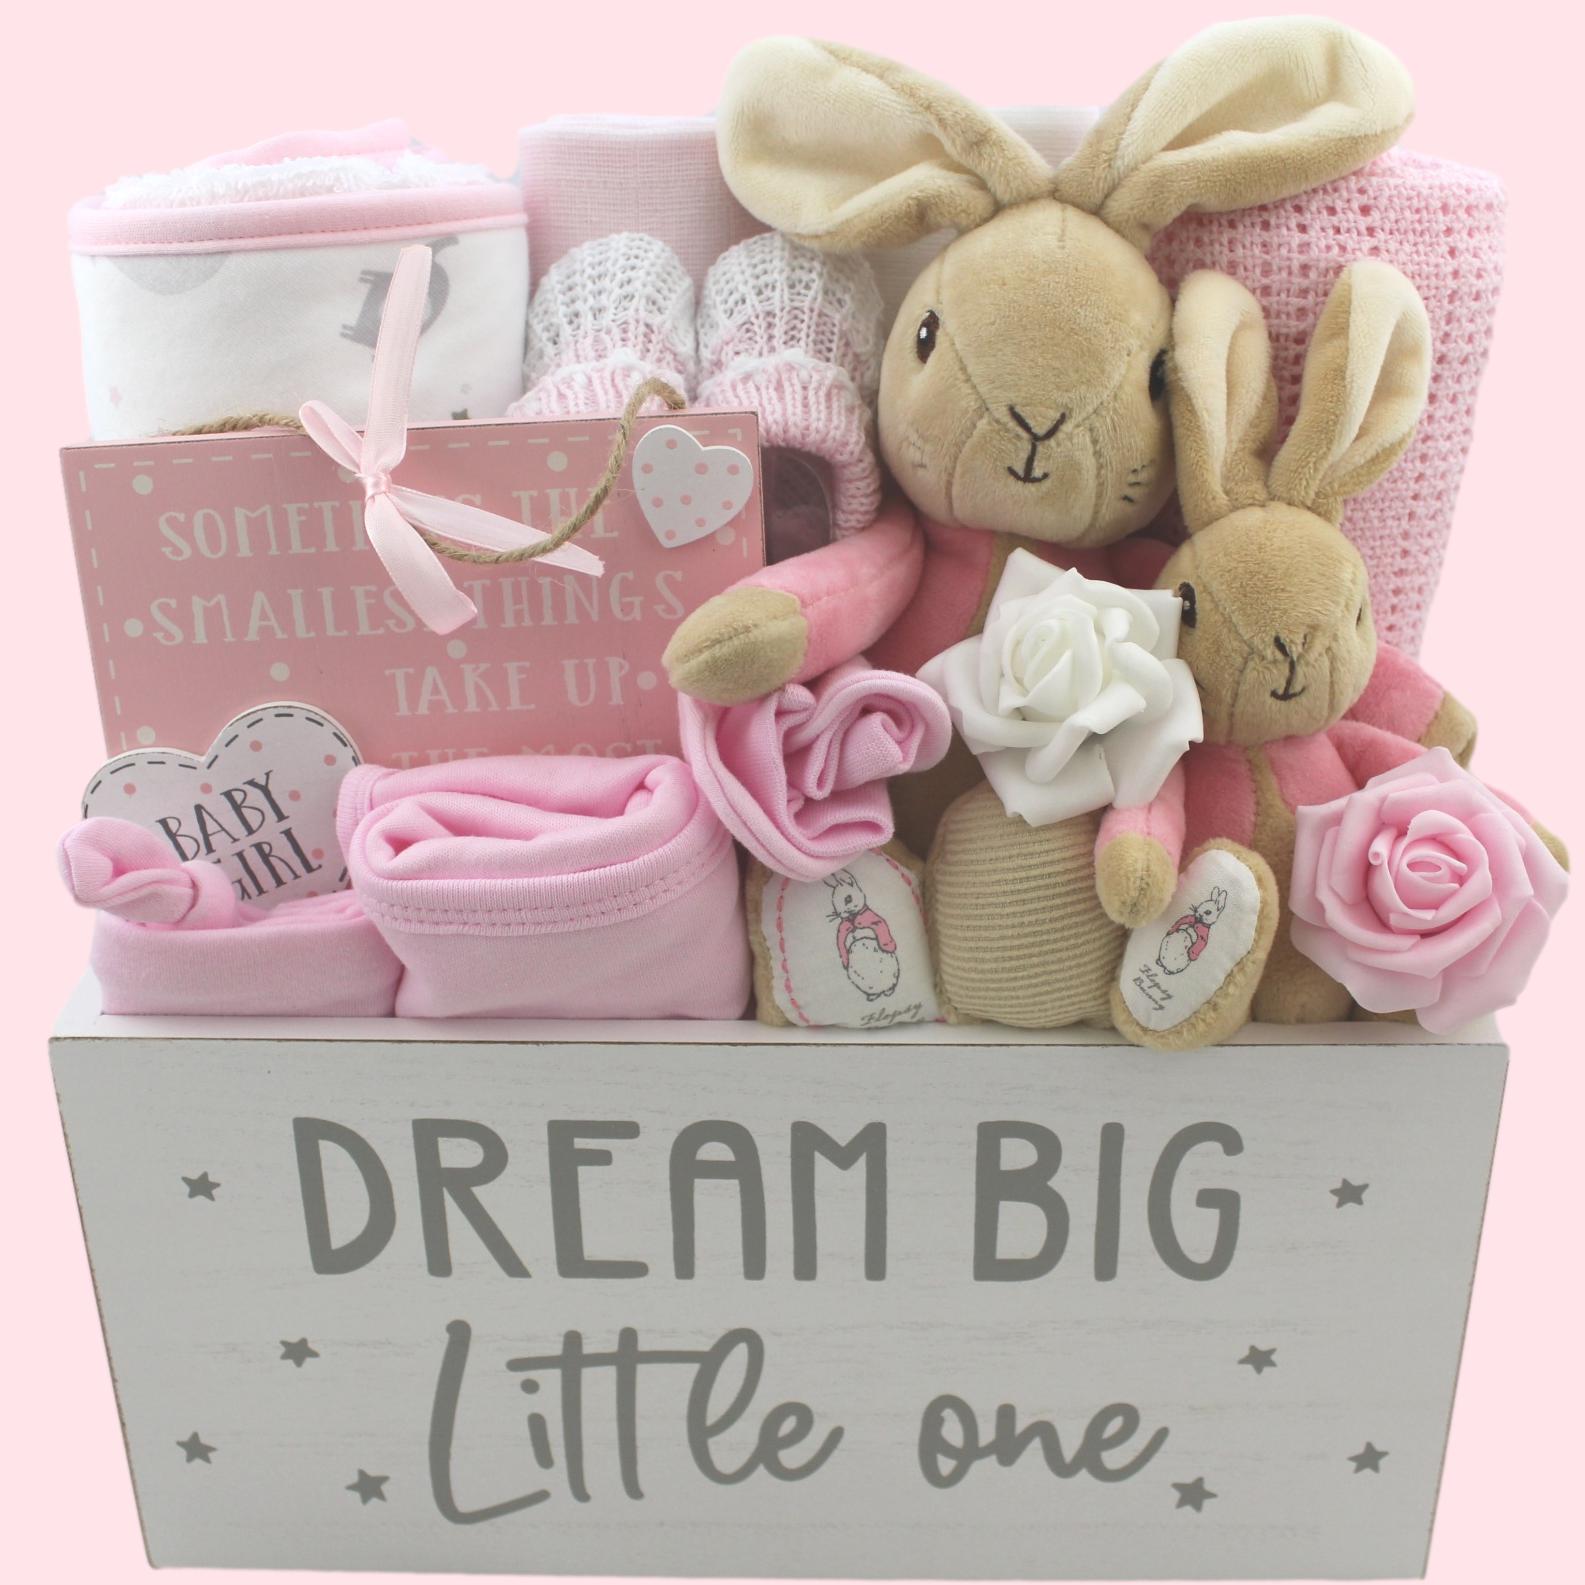 Luxury baby girl newborn gift basket, baby Gift, Baby Shower Gift, Baby Girl